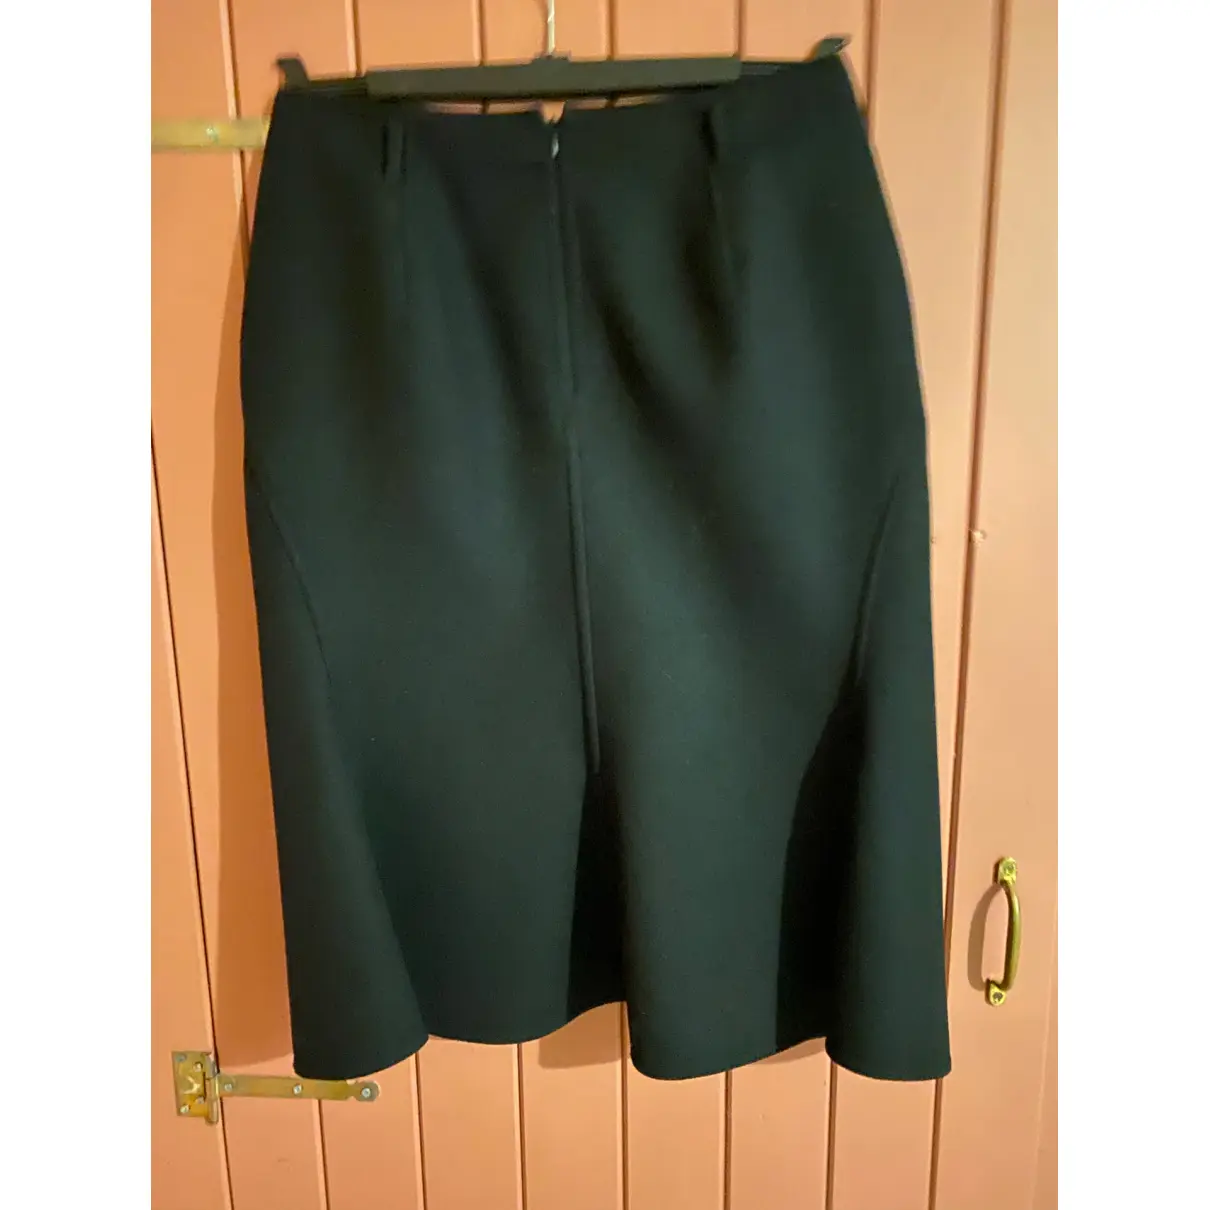 Buy Uniqlo Wool mid-length skirt online